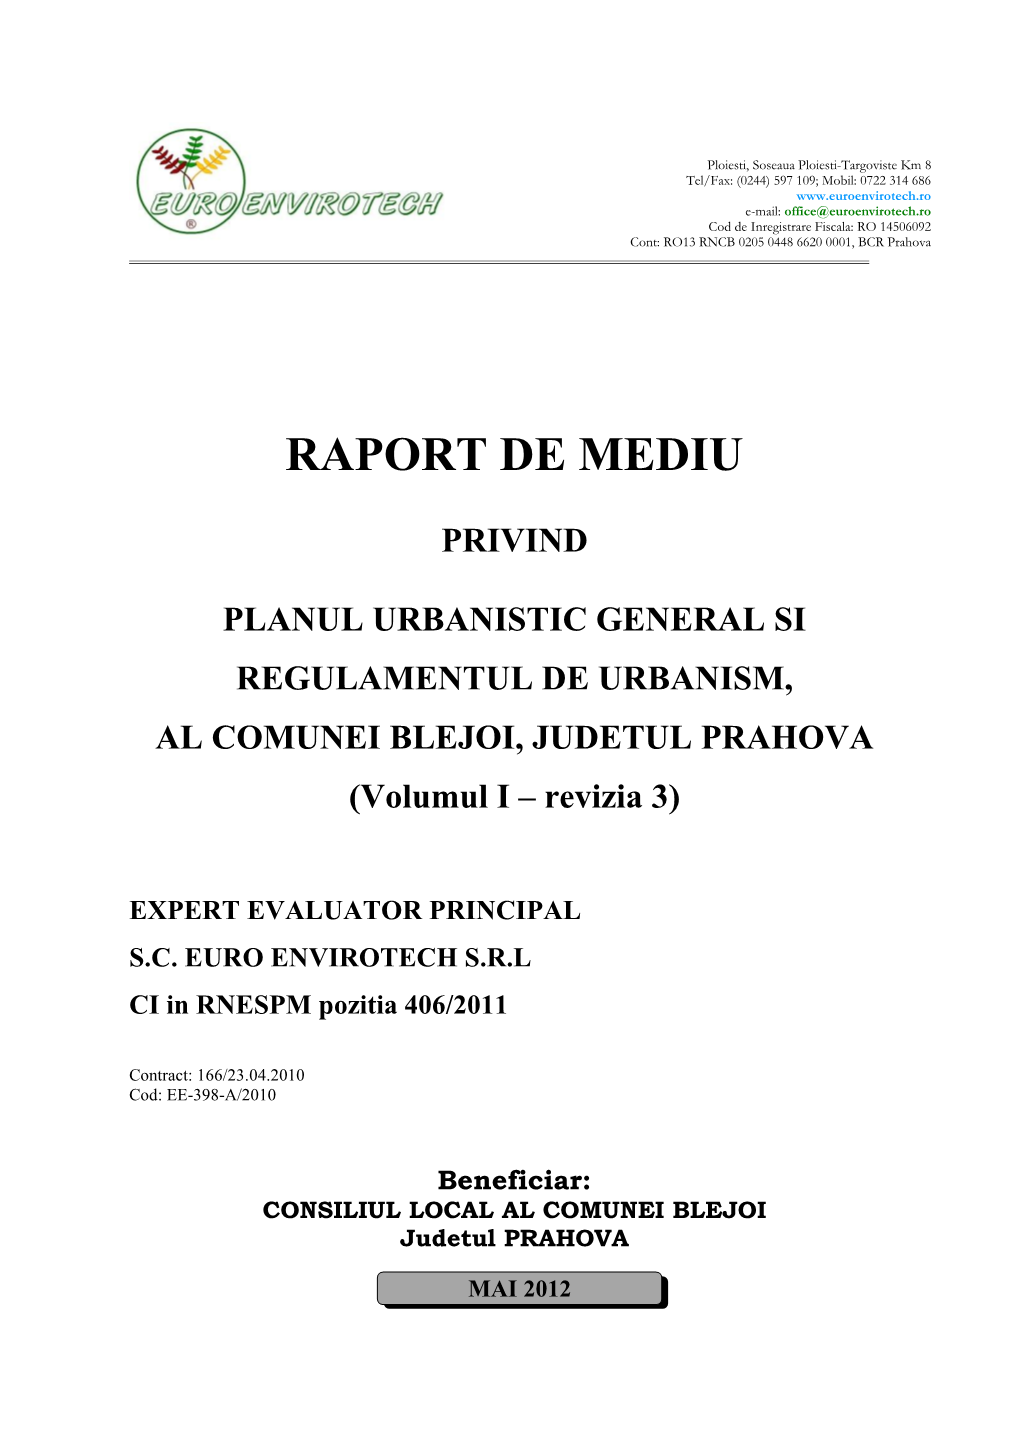 Raport De Mediu Privind Planul Urbanistic General Si Regulamentul De Urbanism Al Comunei Blejoi, 2 Judetul Prahova – Volumul I (Rev 3)